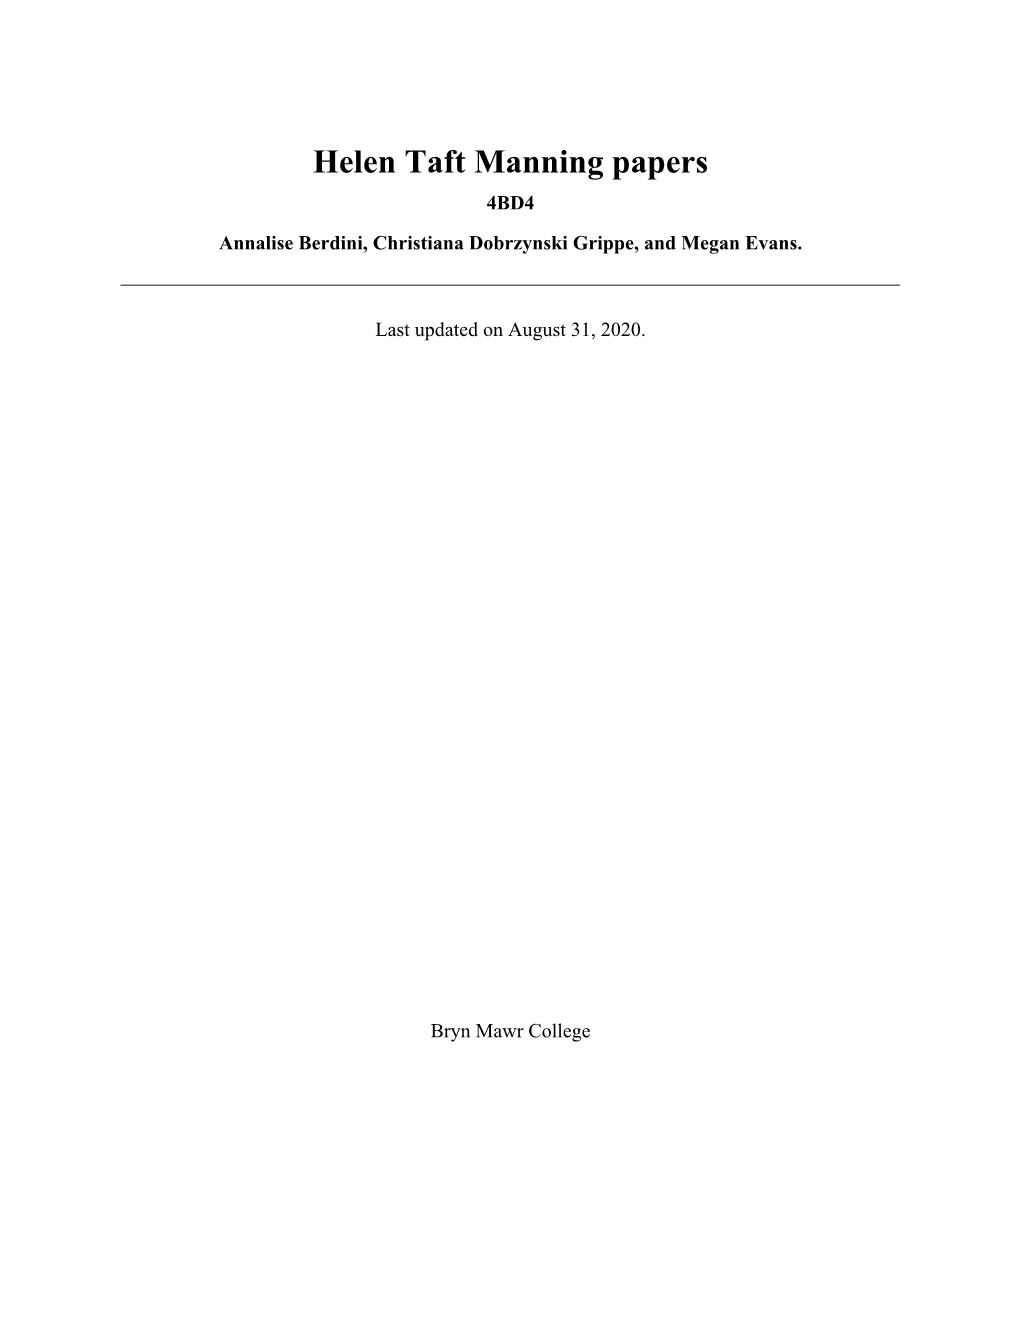 Helen Taft Manning Papers 4BD4 Annalise Berdini, Christiana Dobrzynski Grippe, and Megan Evans